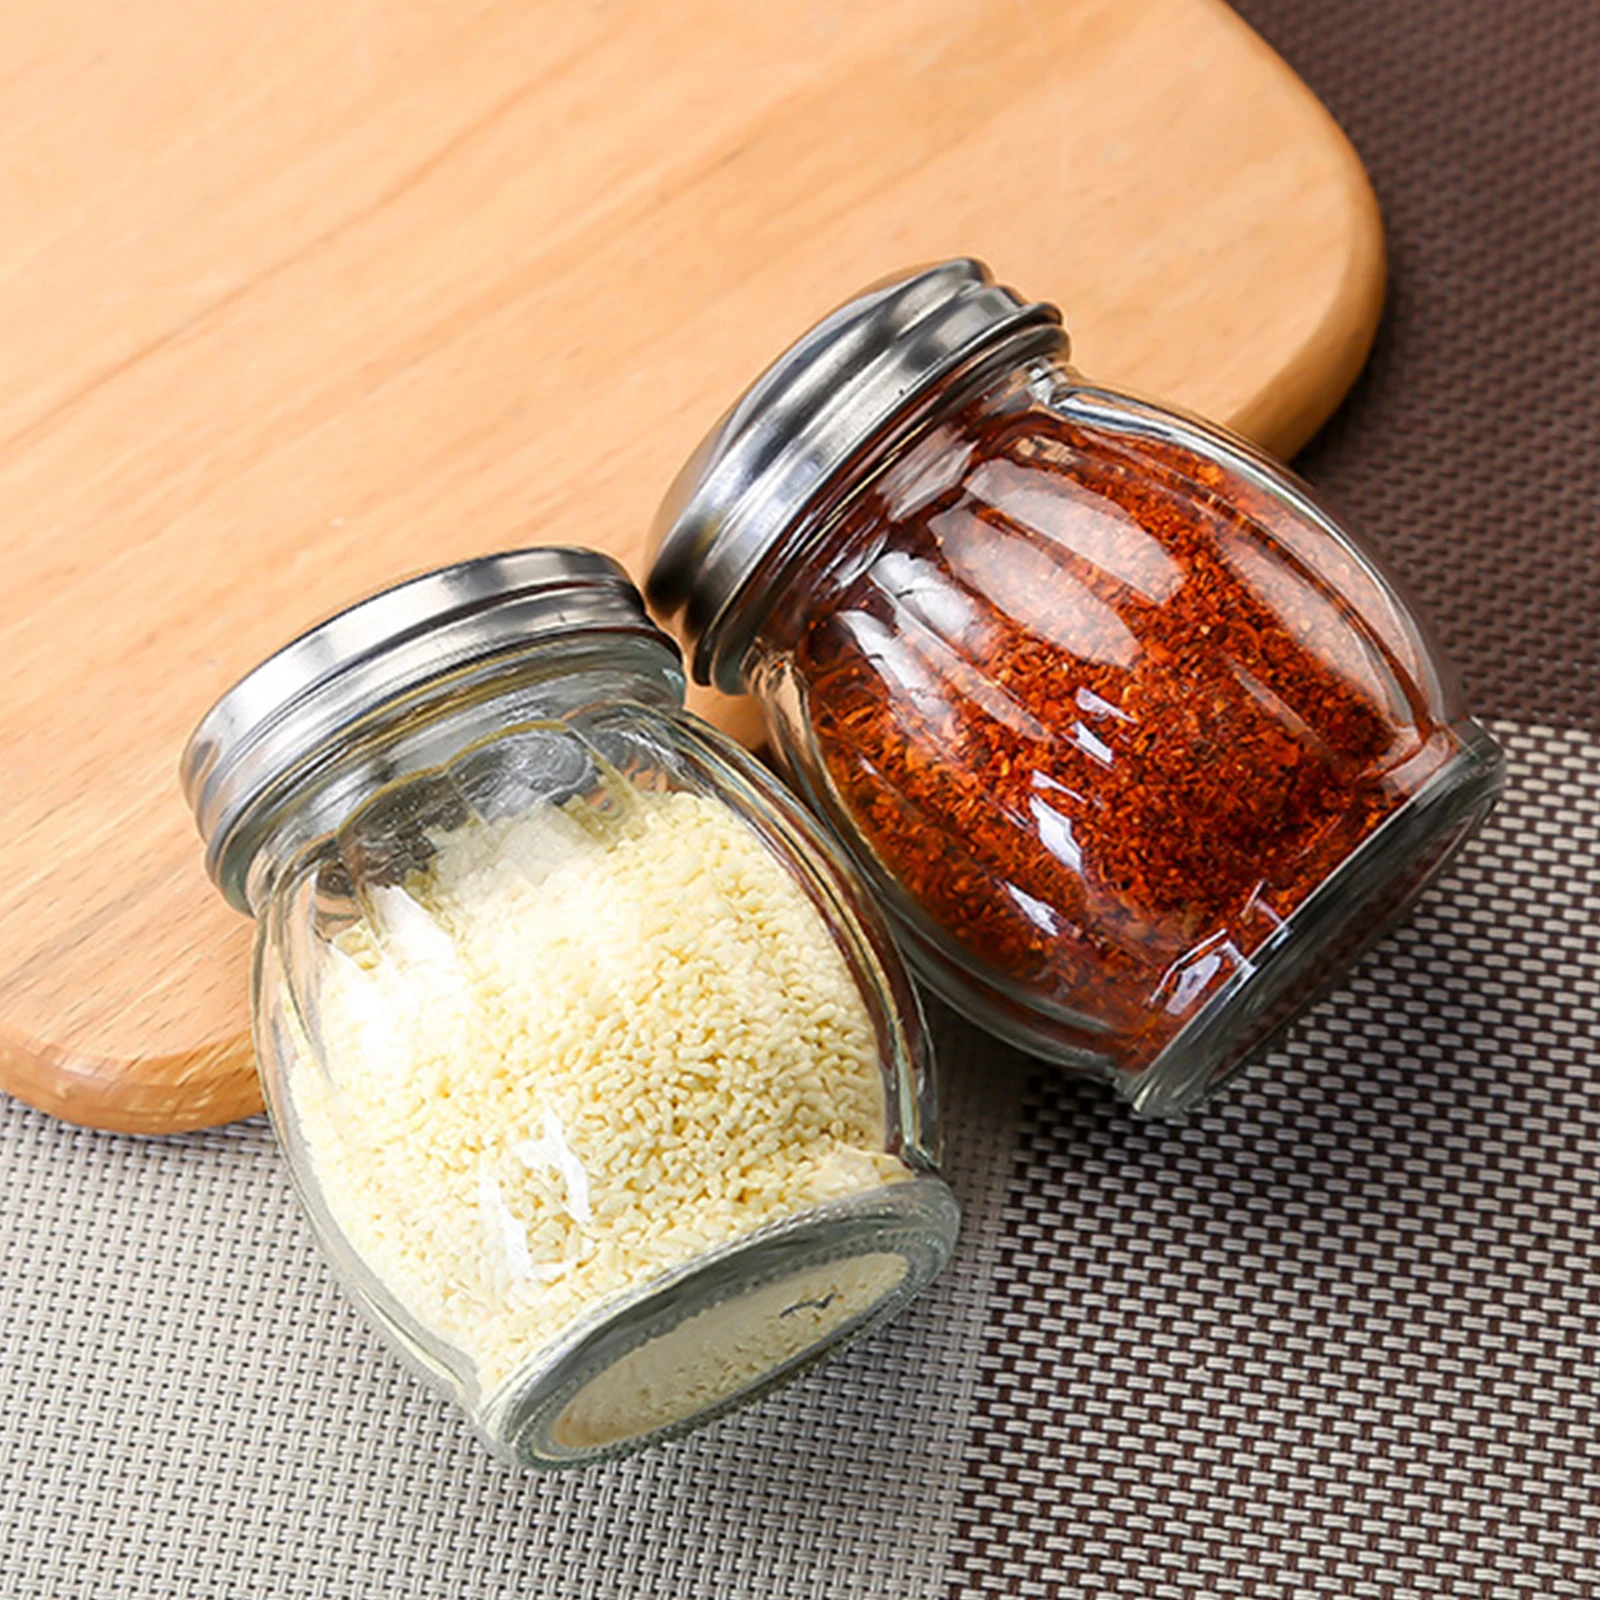 https://ae01.alicdn.com/kf/S76d63f2270304577945e5864923c069ak/Kitchen-Gadget-50ML-Glass-Seasoning-Shaker-Bottles-Salt-and-Pepper-Shaker-Spices-Condiment-Jars-Spices-Boxes.jpg